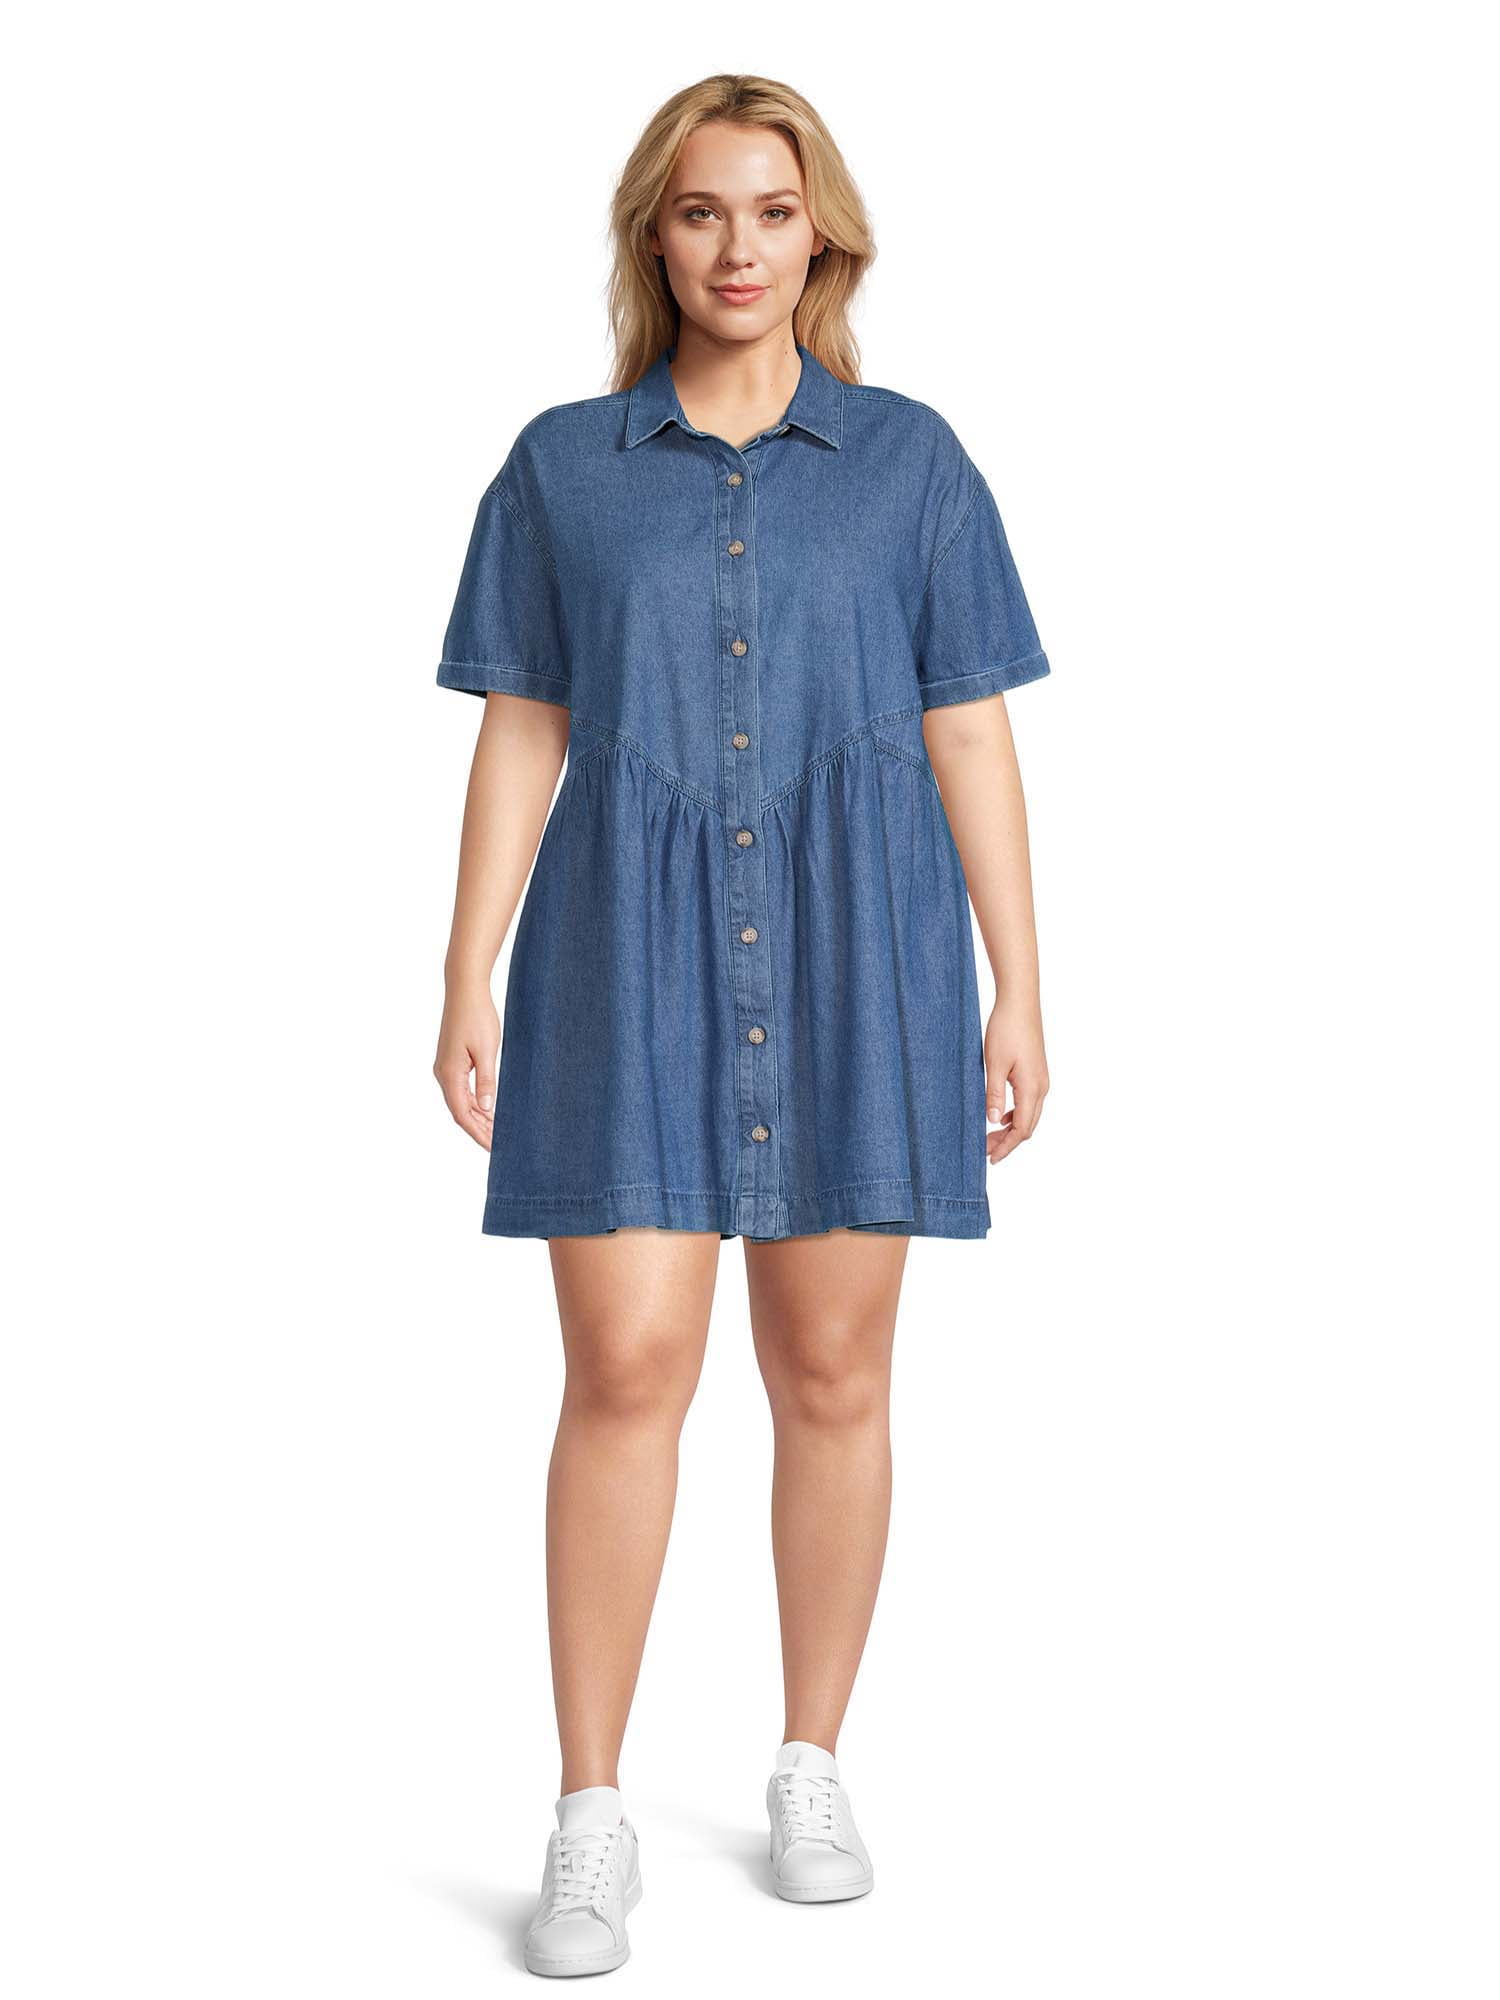 Terra & Sky Women's Plus Size Woven Shirt Dress